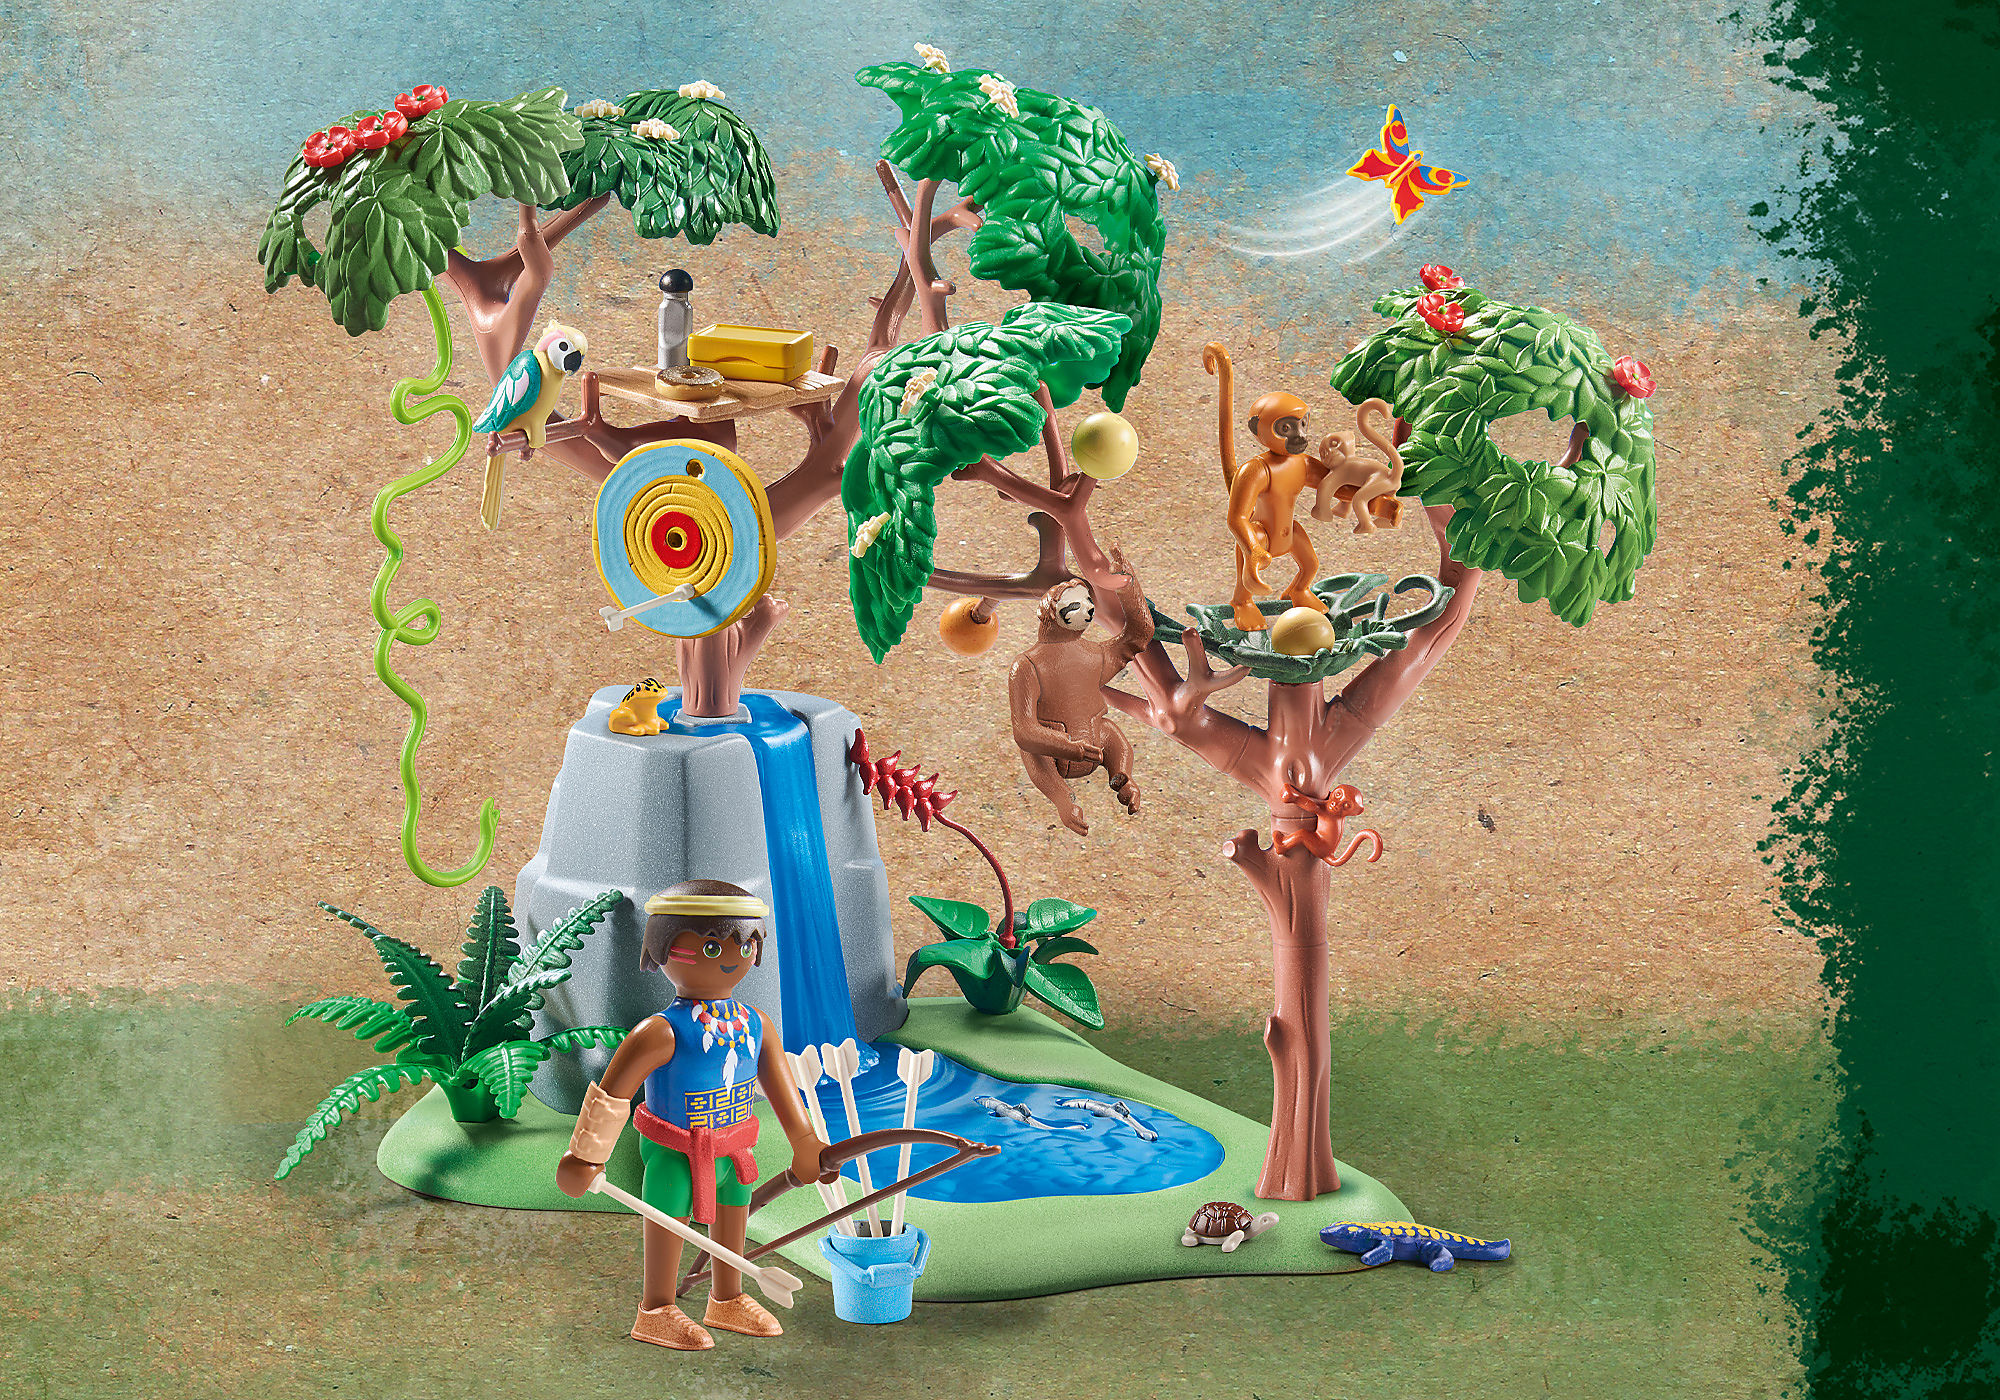 Playmobil® - Aire de jeu tropicale de la jungle - 71142 - Playmobil®  Wiltopia